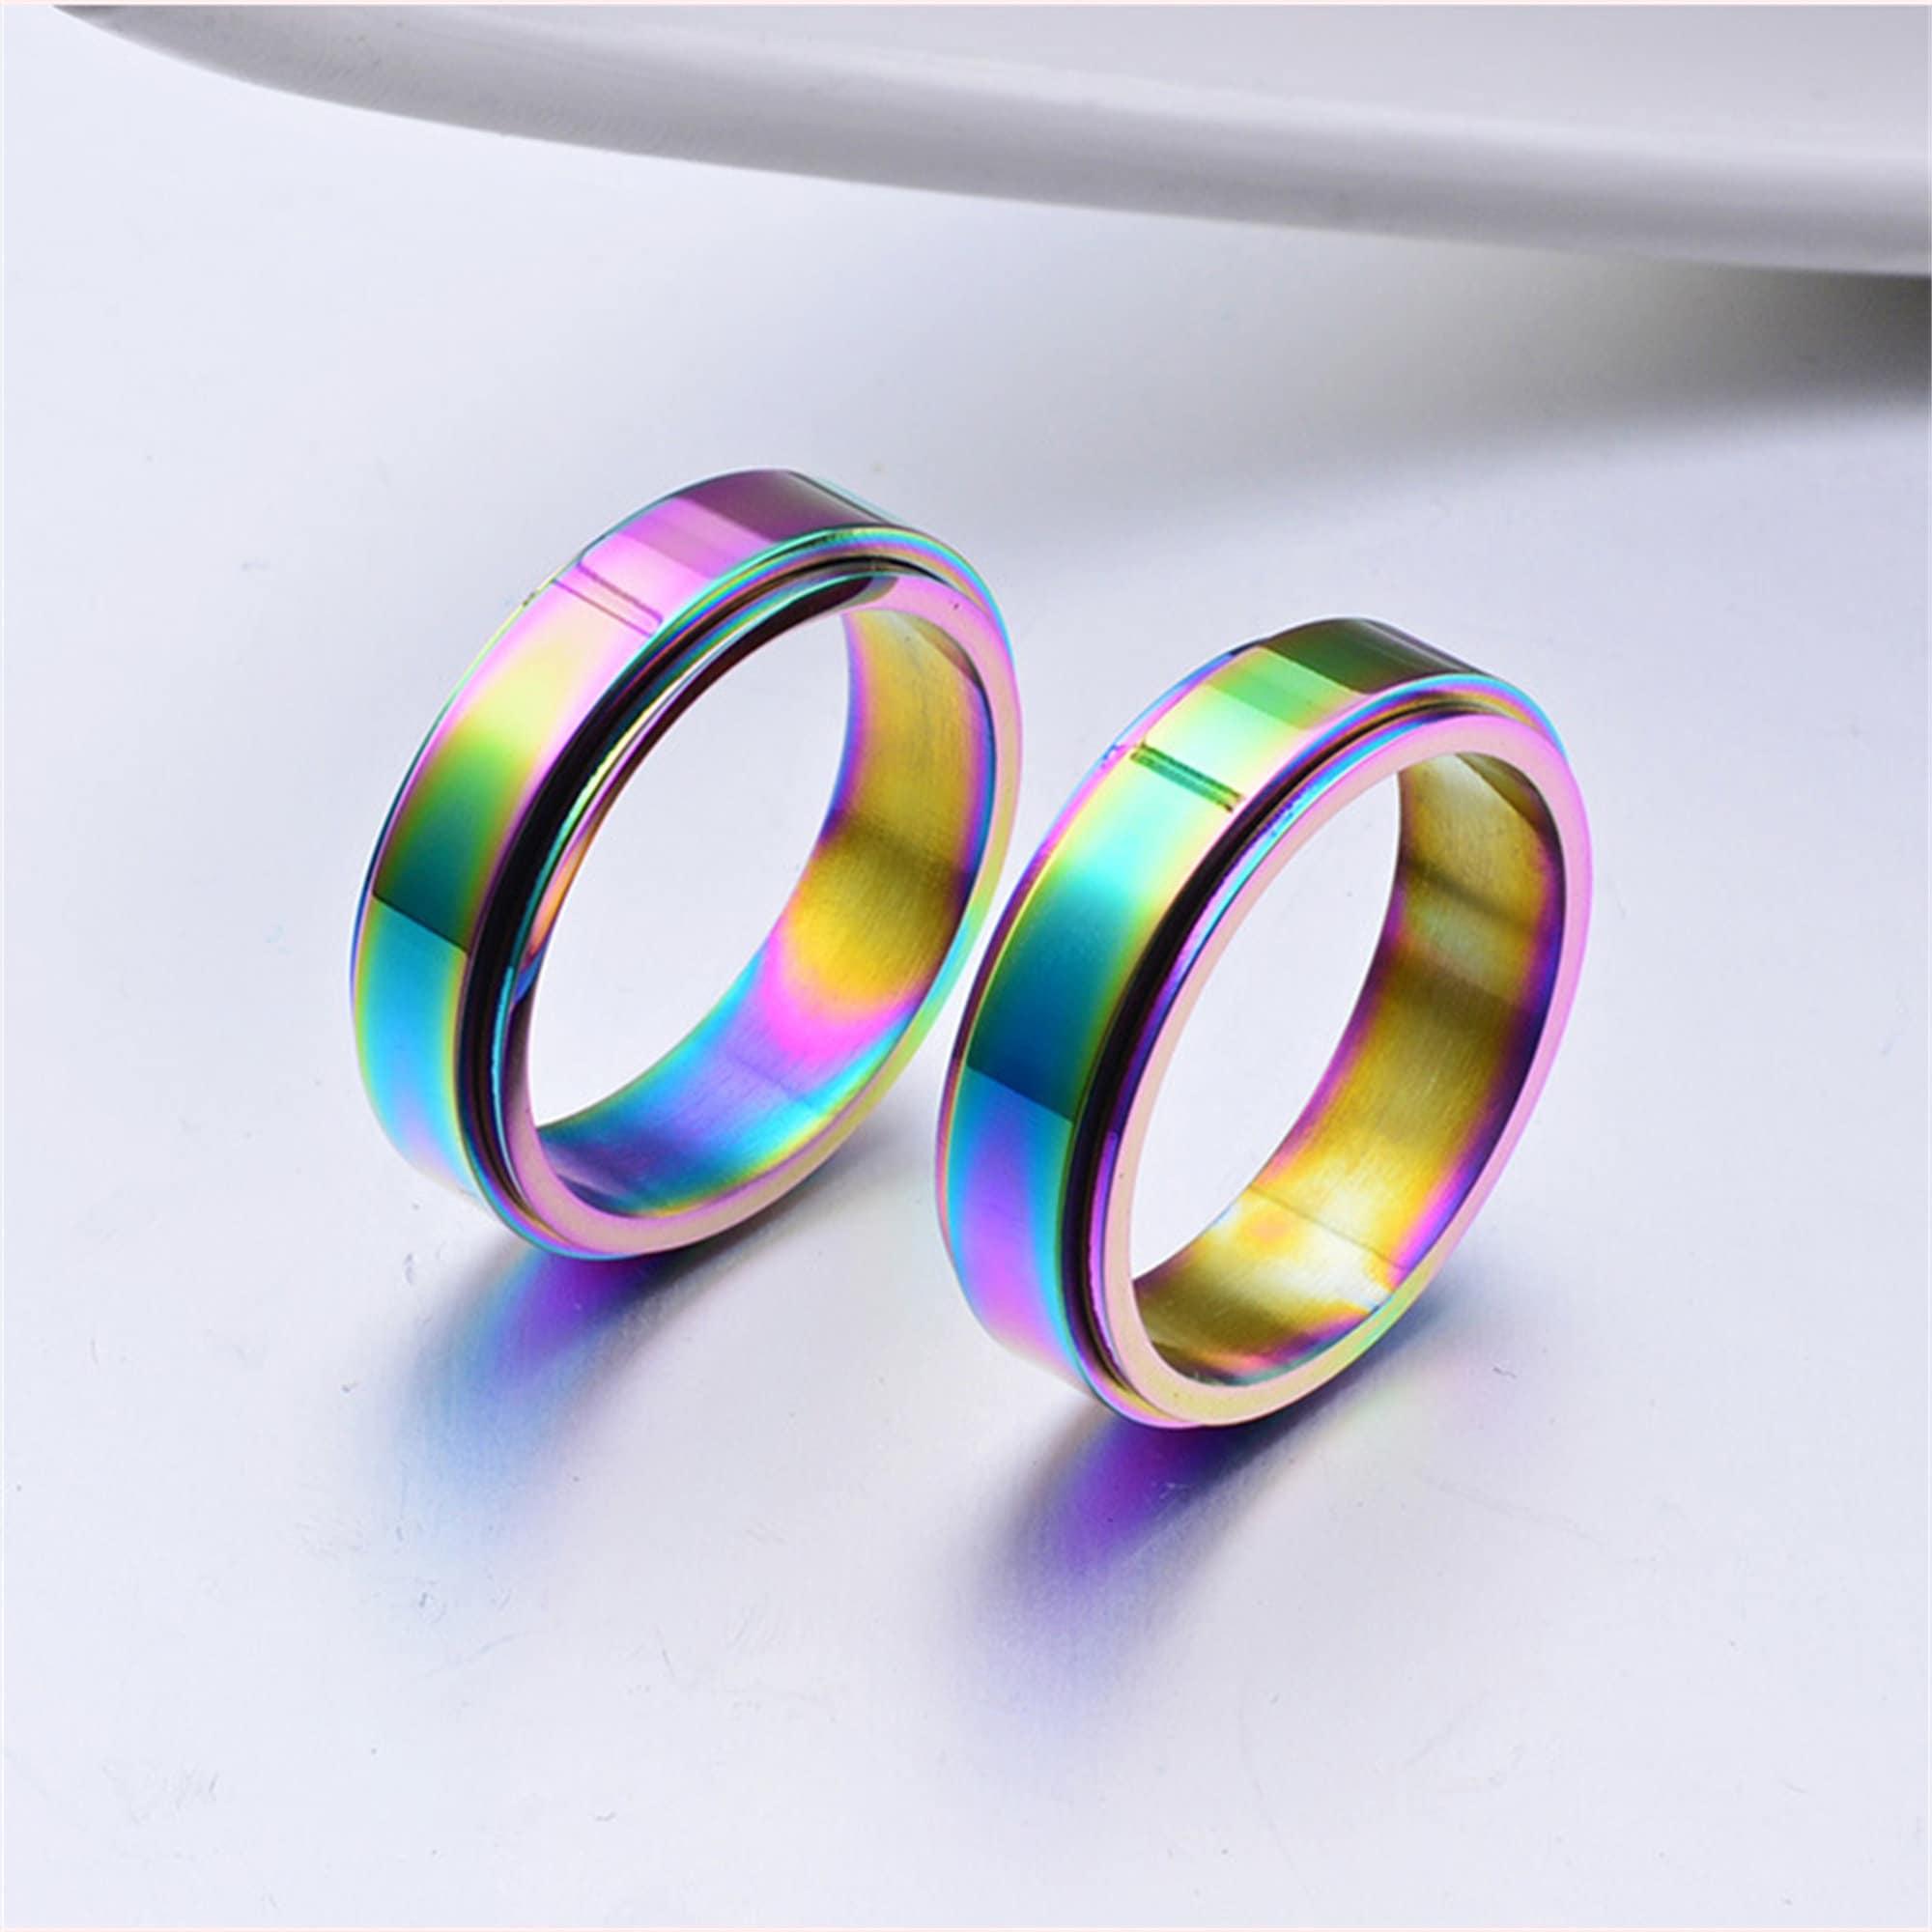 Two rainbow Monochromatic rings.